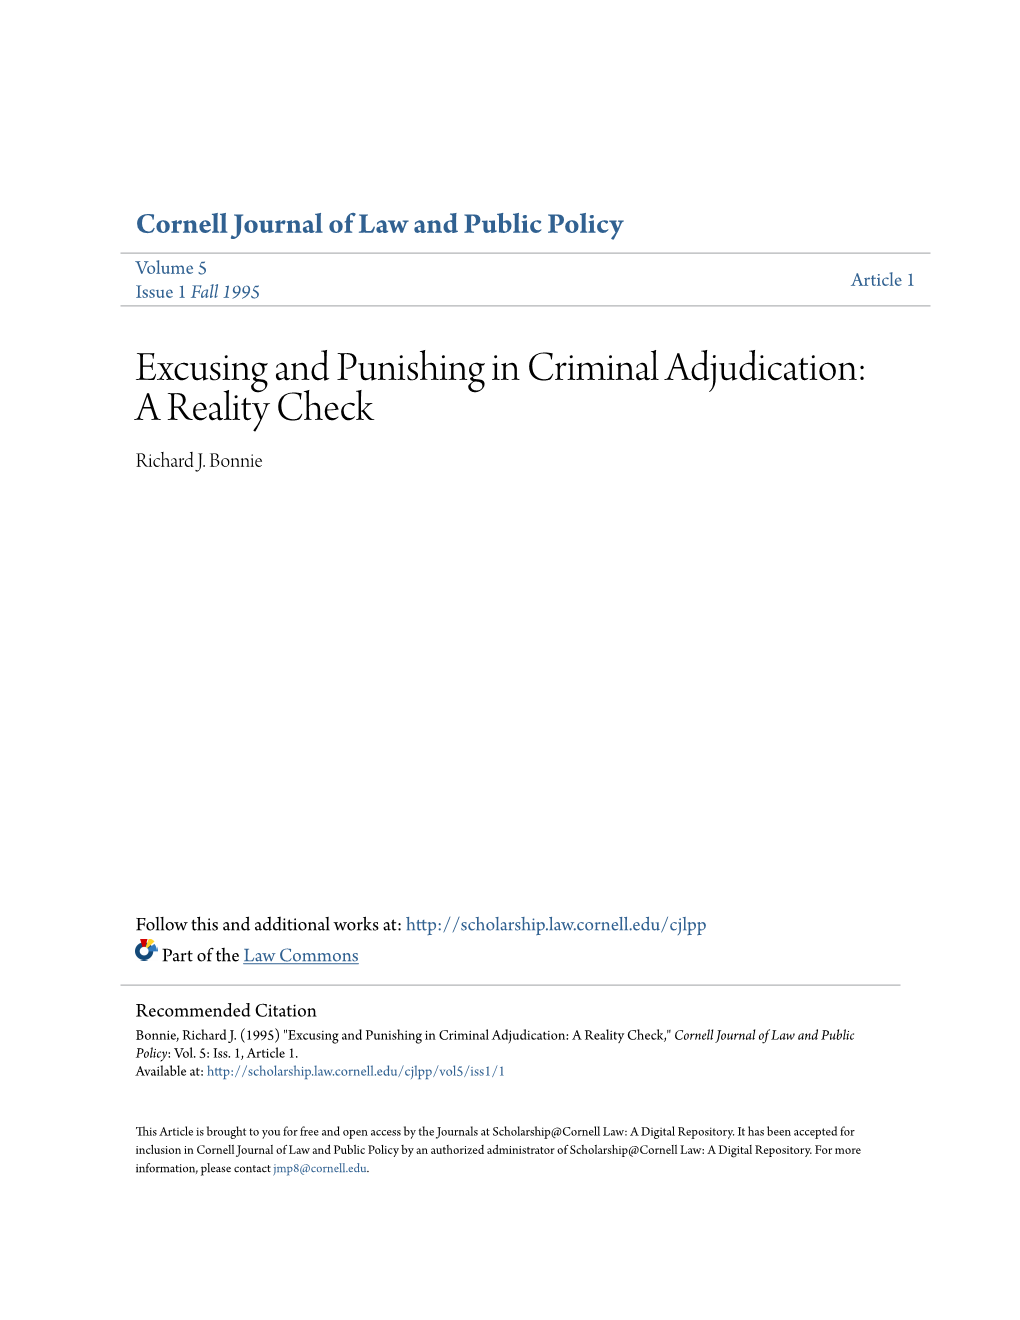 Excusing and Punishing in Criminal Adjudication: a Reality Check Richard J